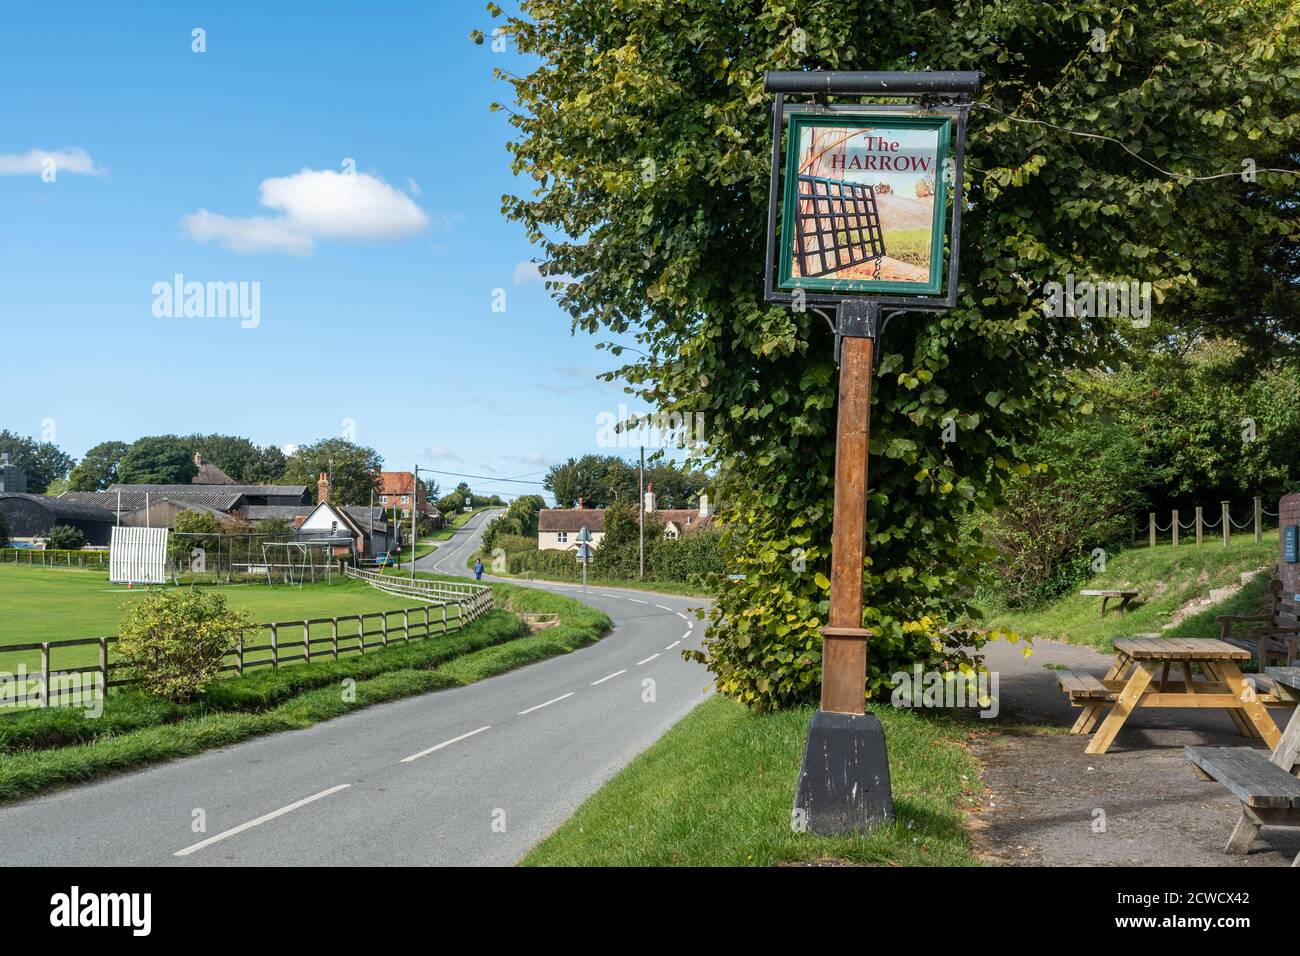 The Harrow pub sign on the main street in West Ilsley, a Berkshire village, UK Stock Photo